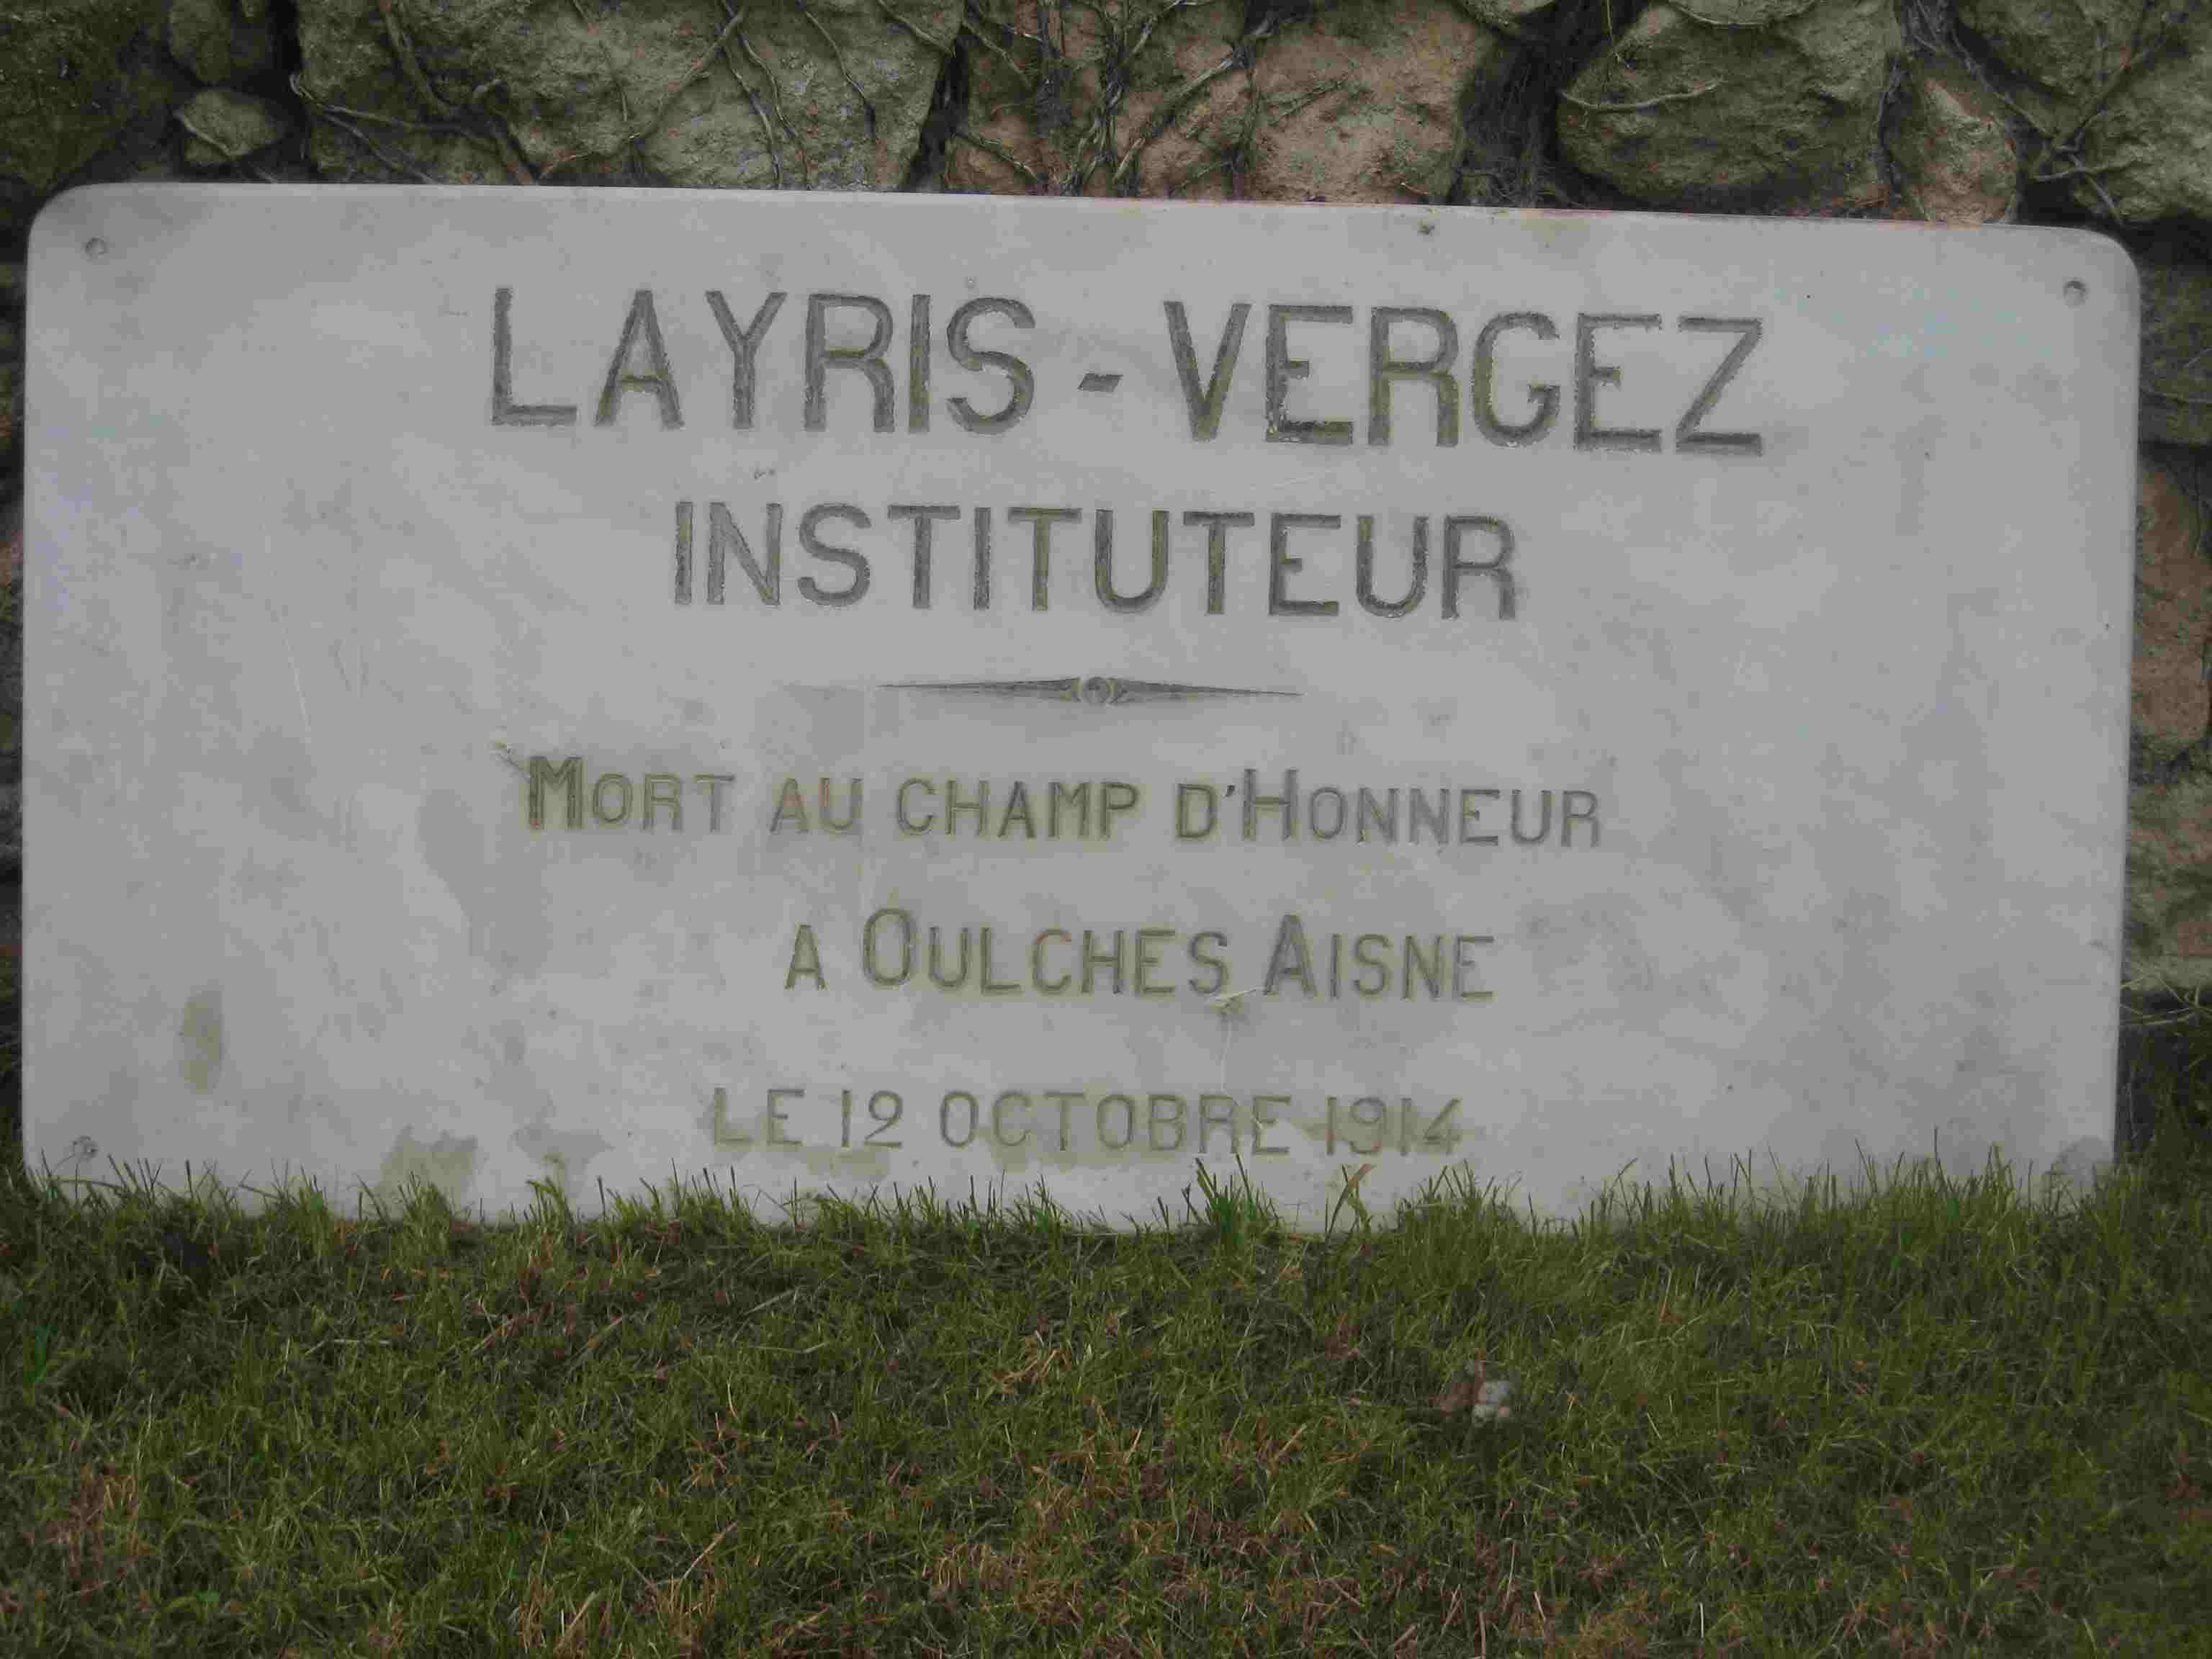 Layris-Vergez-1.JPG